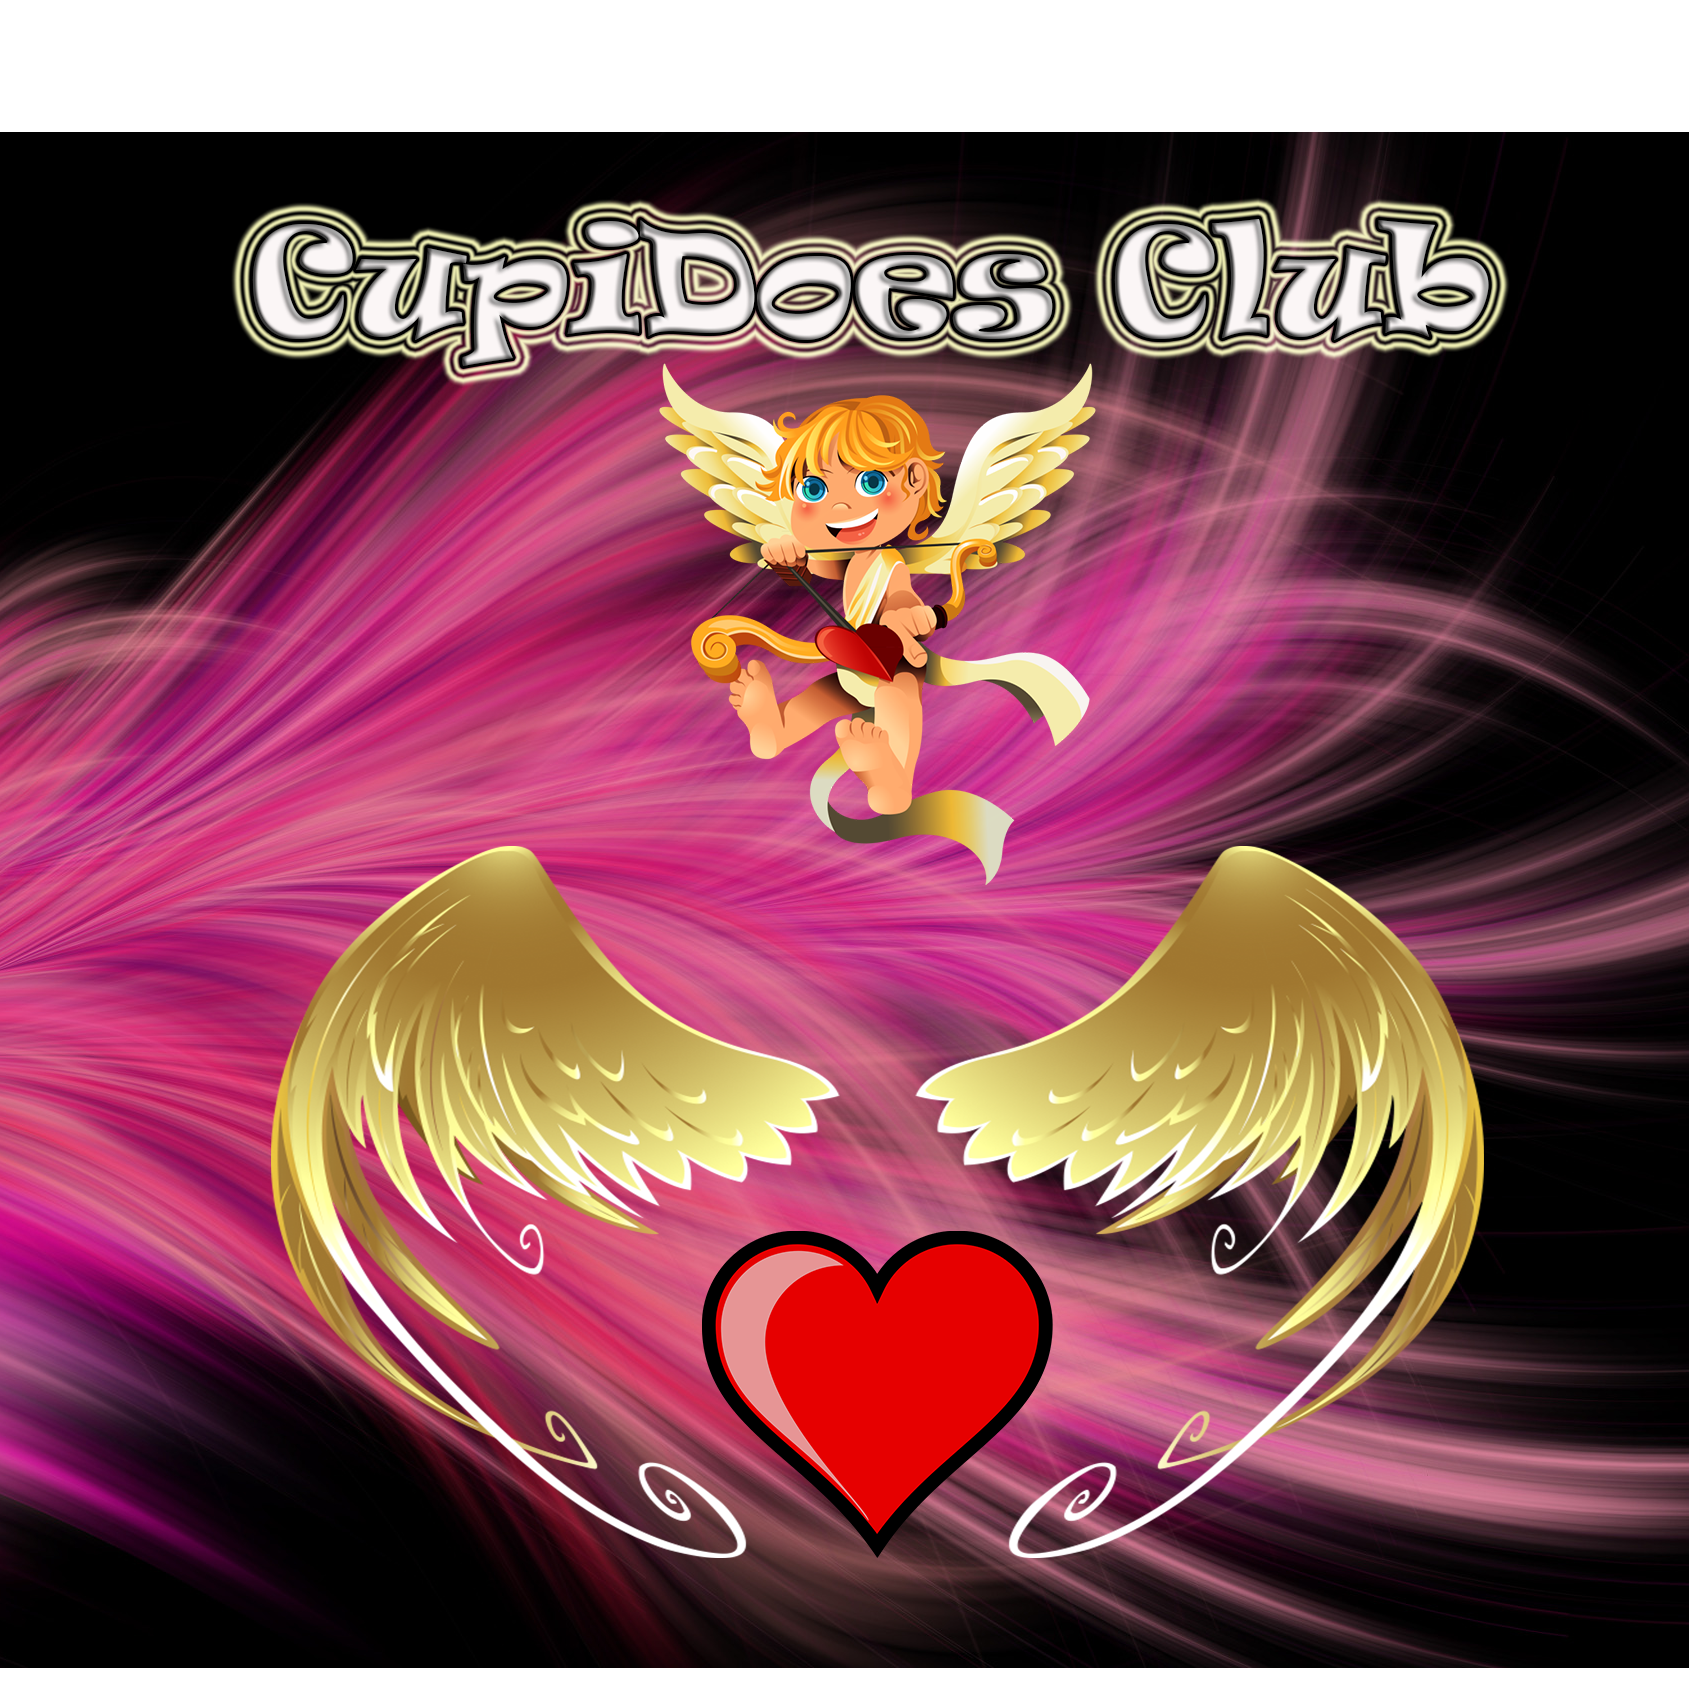 CupiDoes Club Station